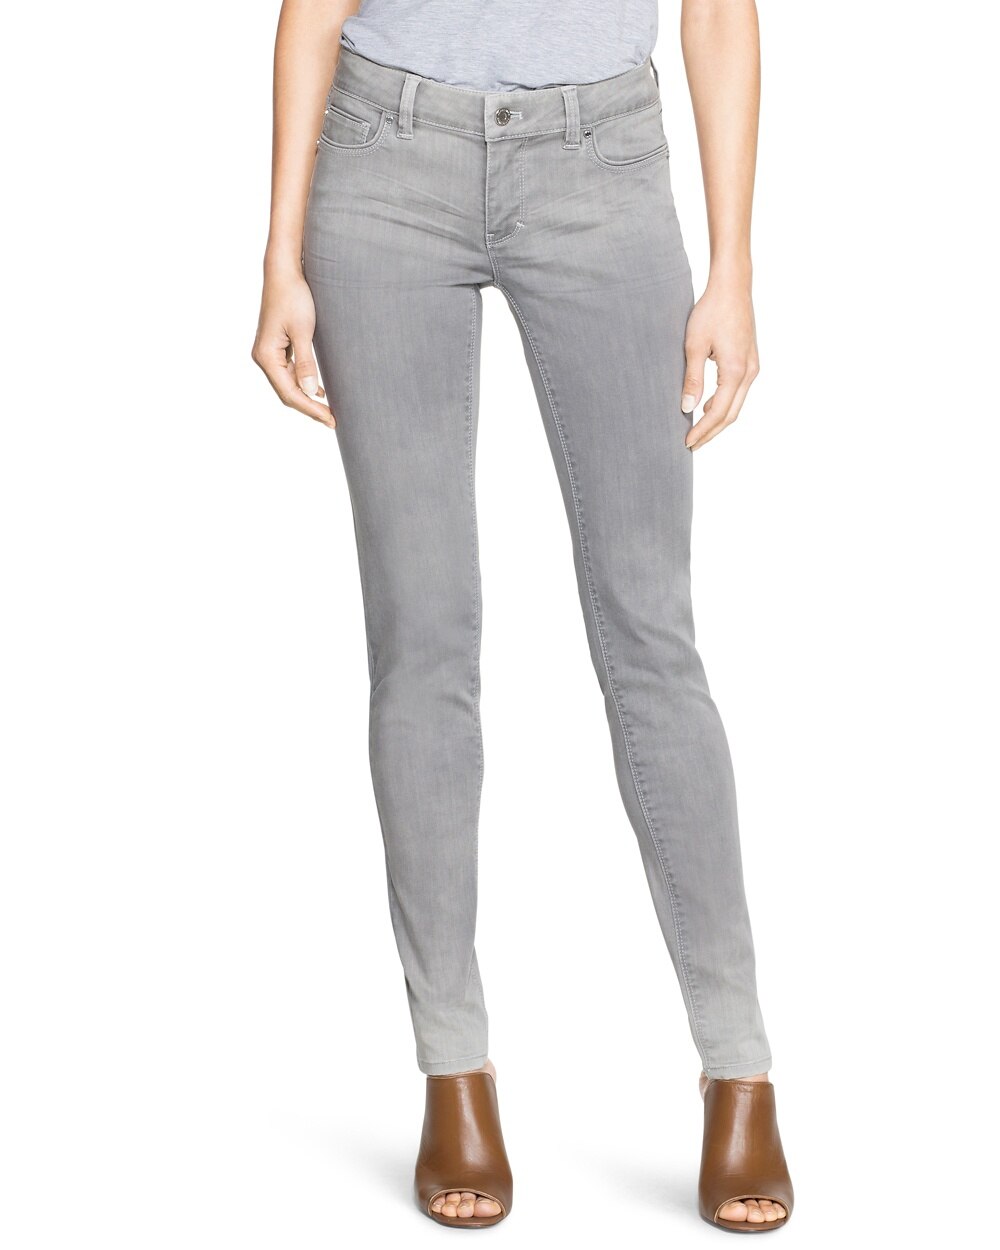 Gray Skinny Jeans - Shop Pants For Women - White, Black, Ankle Pants ...